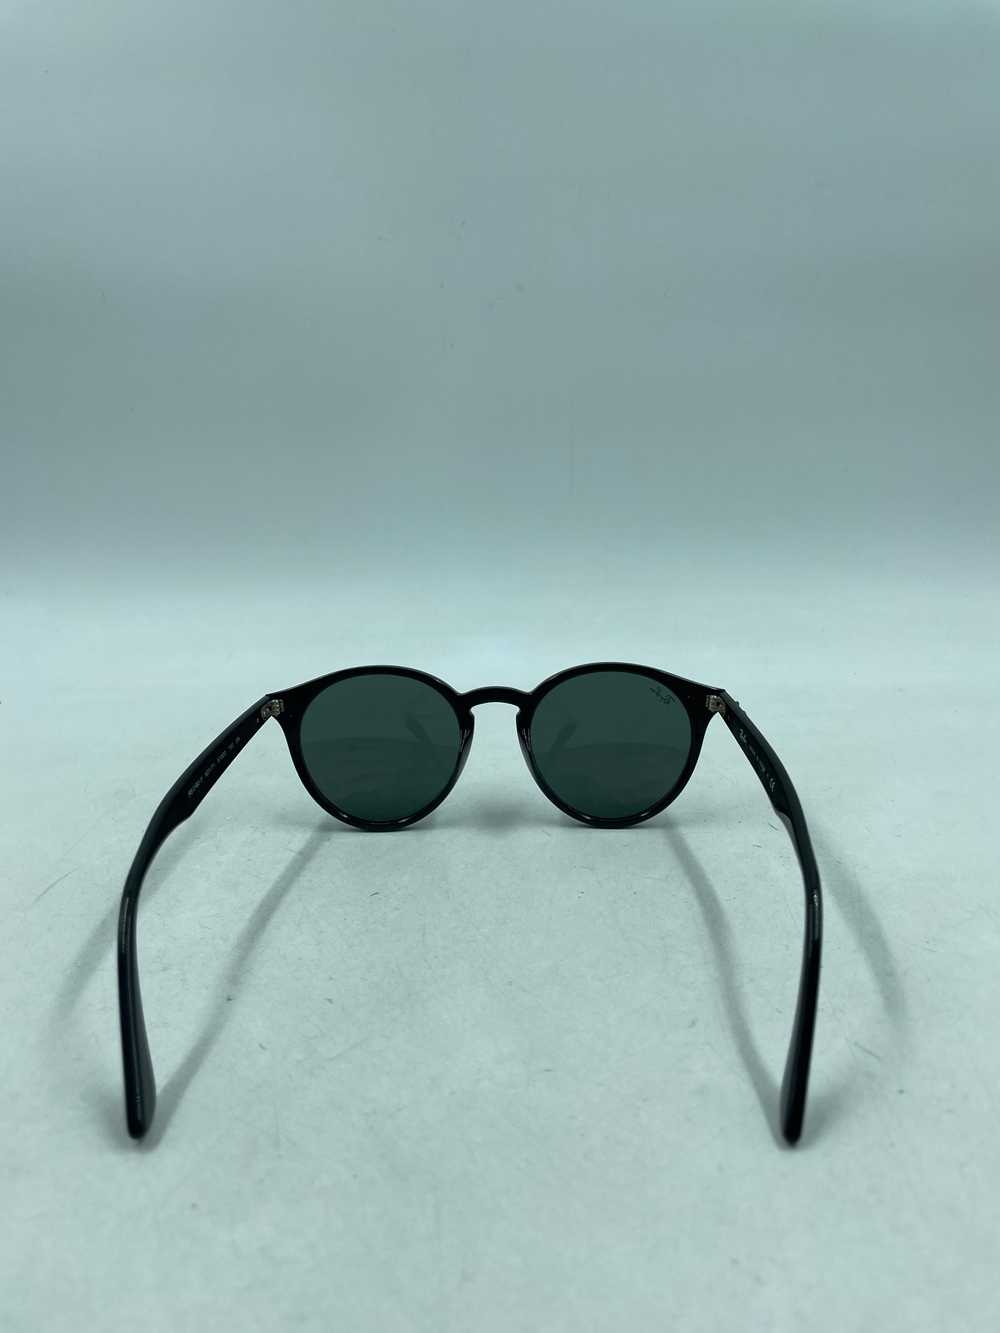 Ray-Ban Round Black Sunglasses - image 3